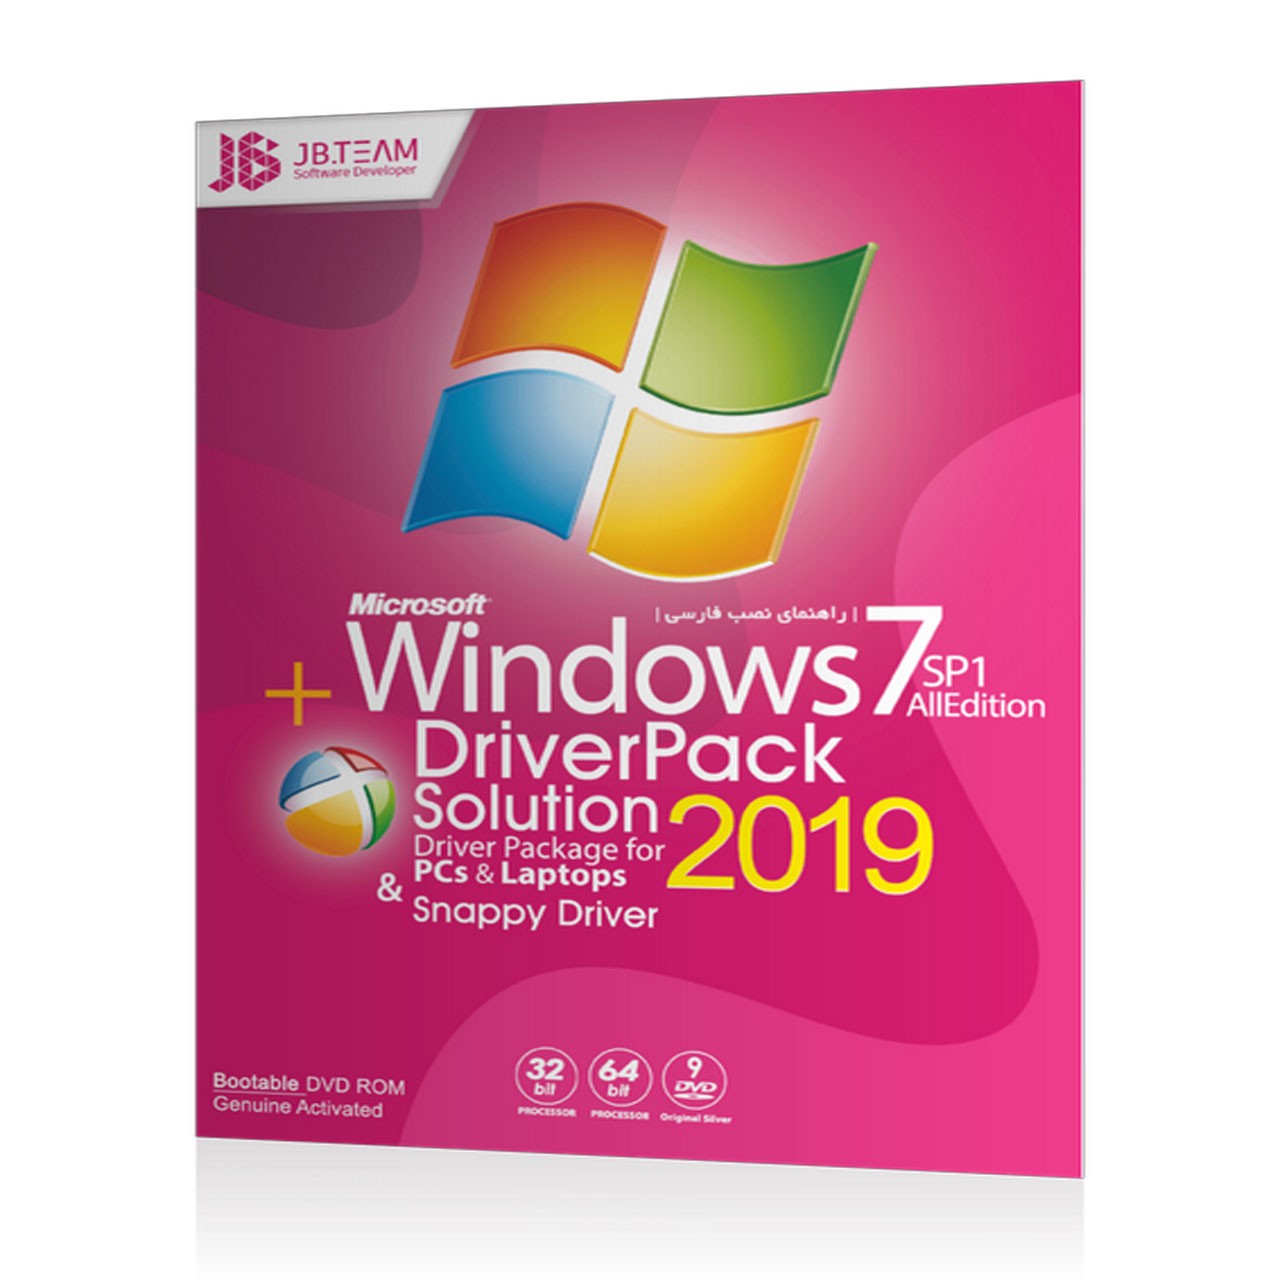 ویندوز Windows 7 +DriverPack Solution 2019 

Windows 7 +DriverPack Solution 2019